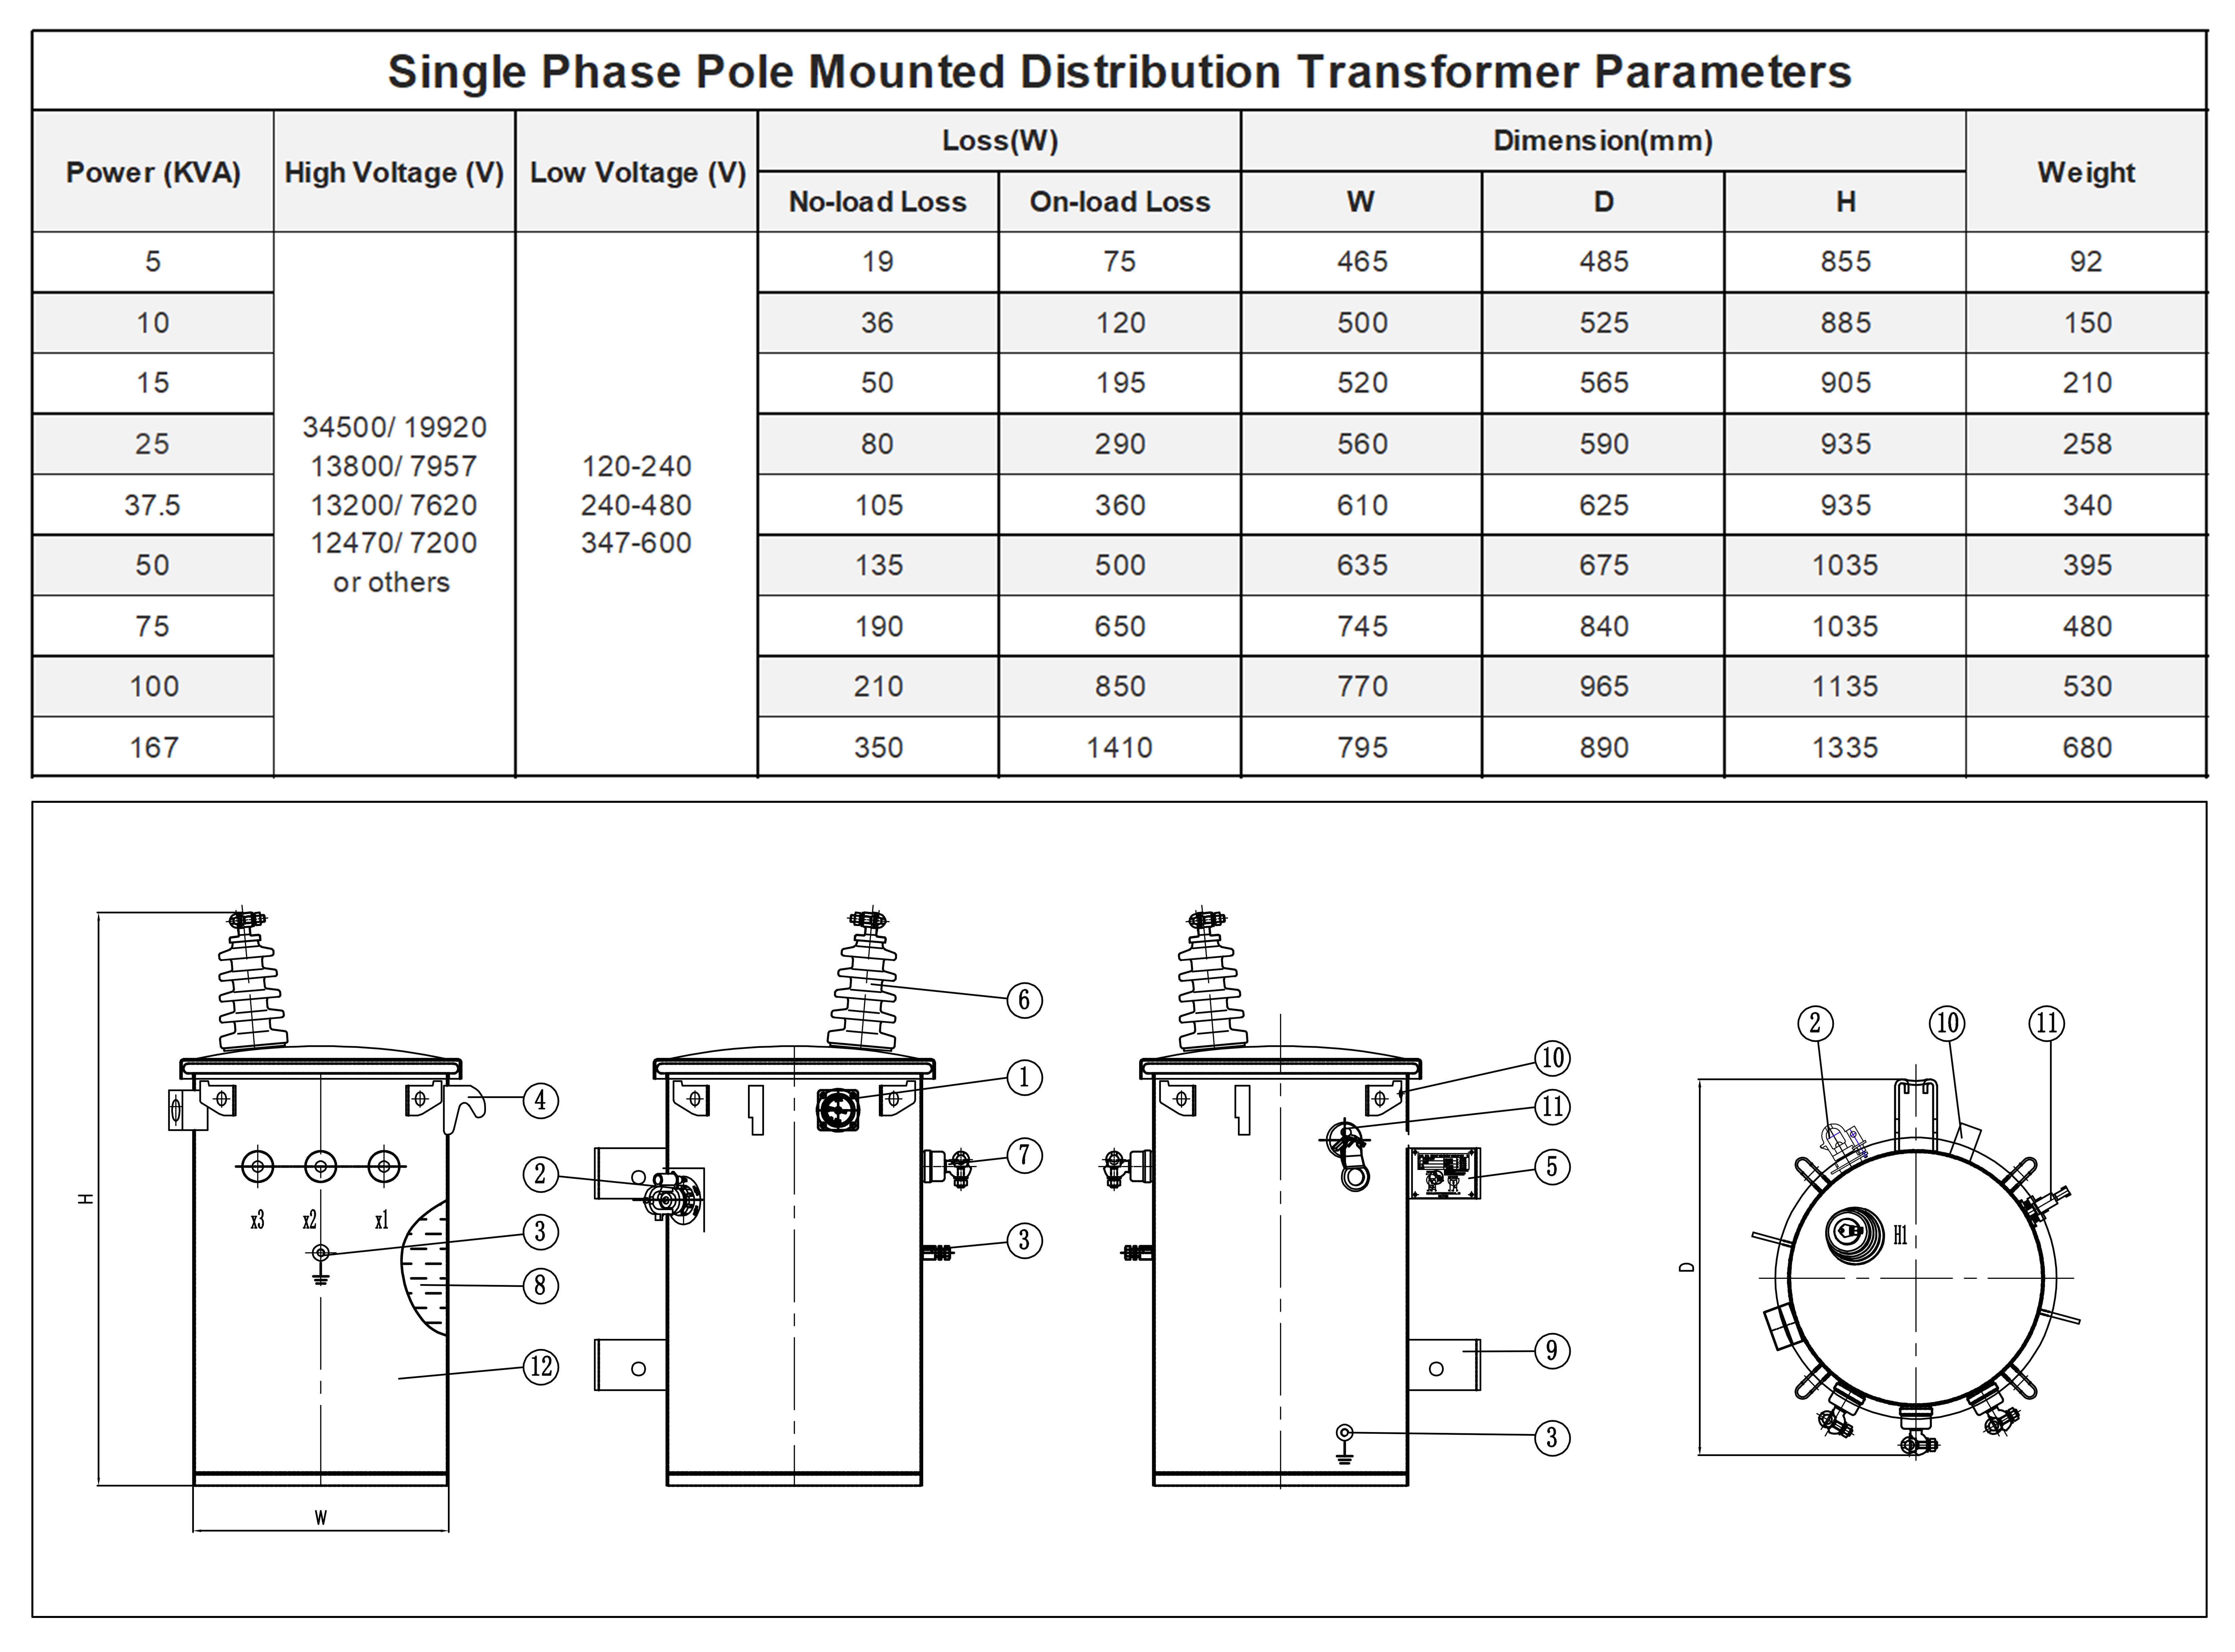 25kVA Single Phase Pole Mounted Distribution Transformer